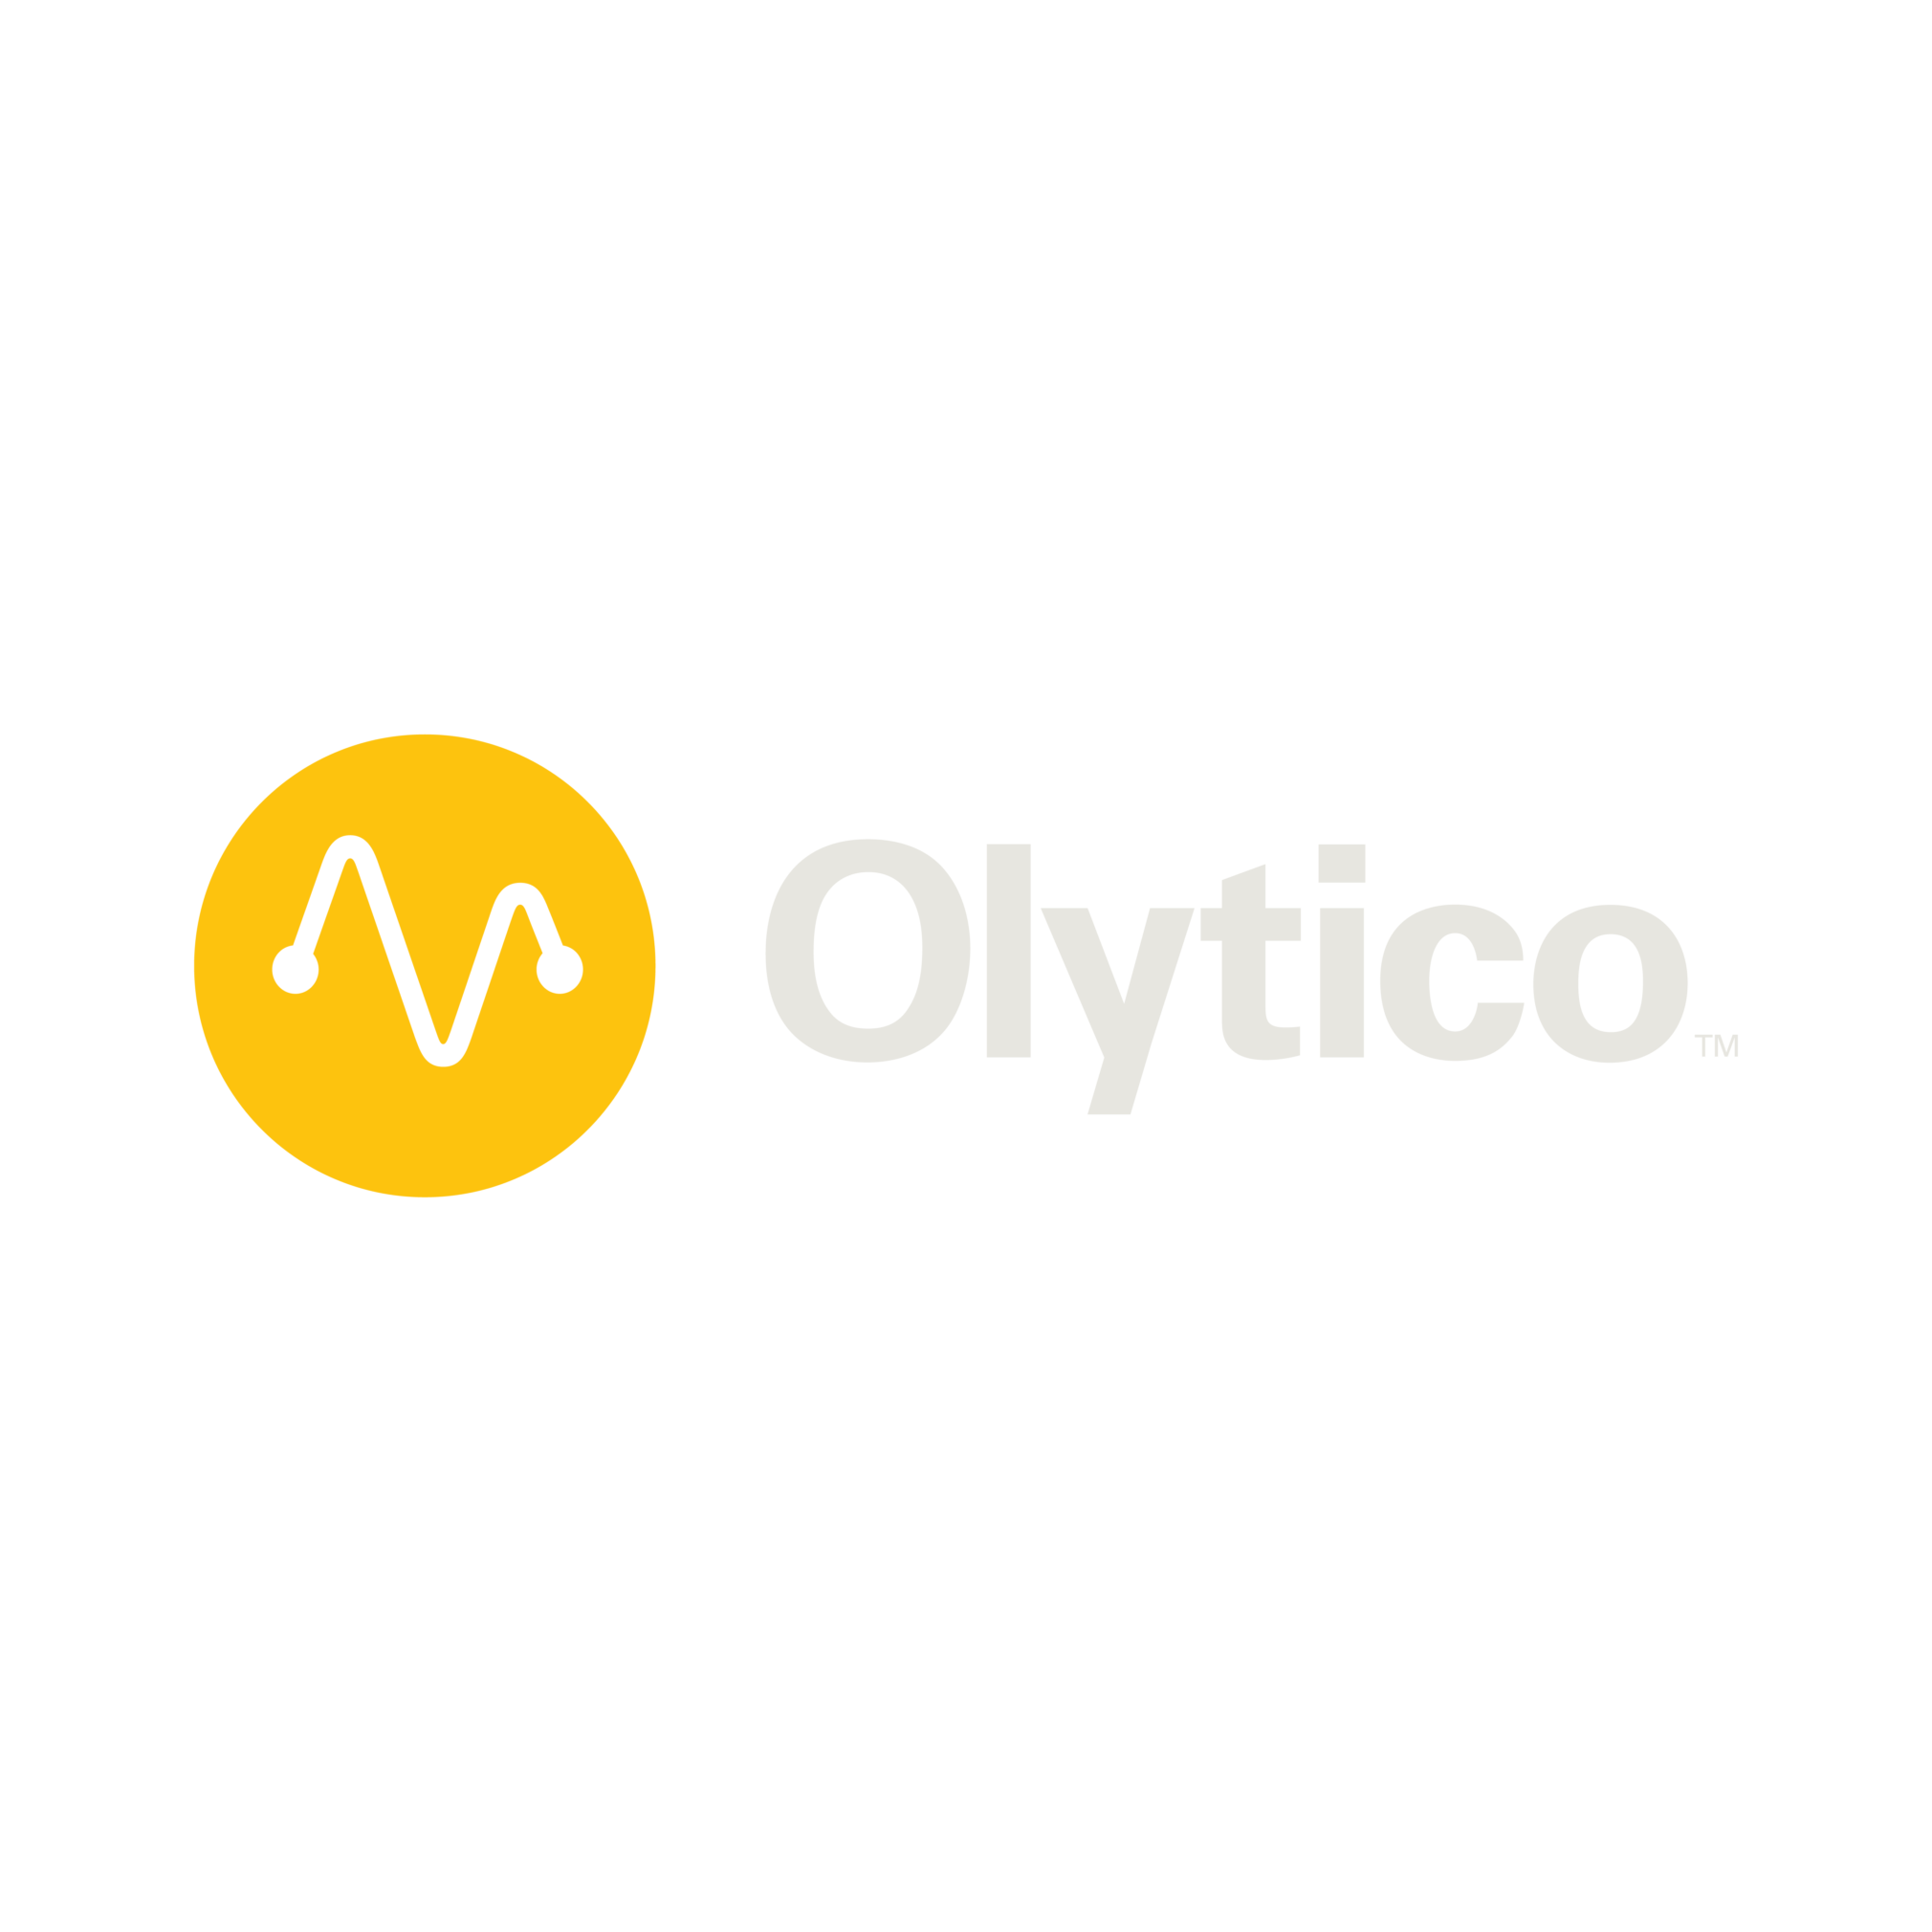 Olytico logo sqaure